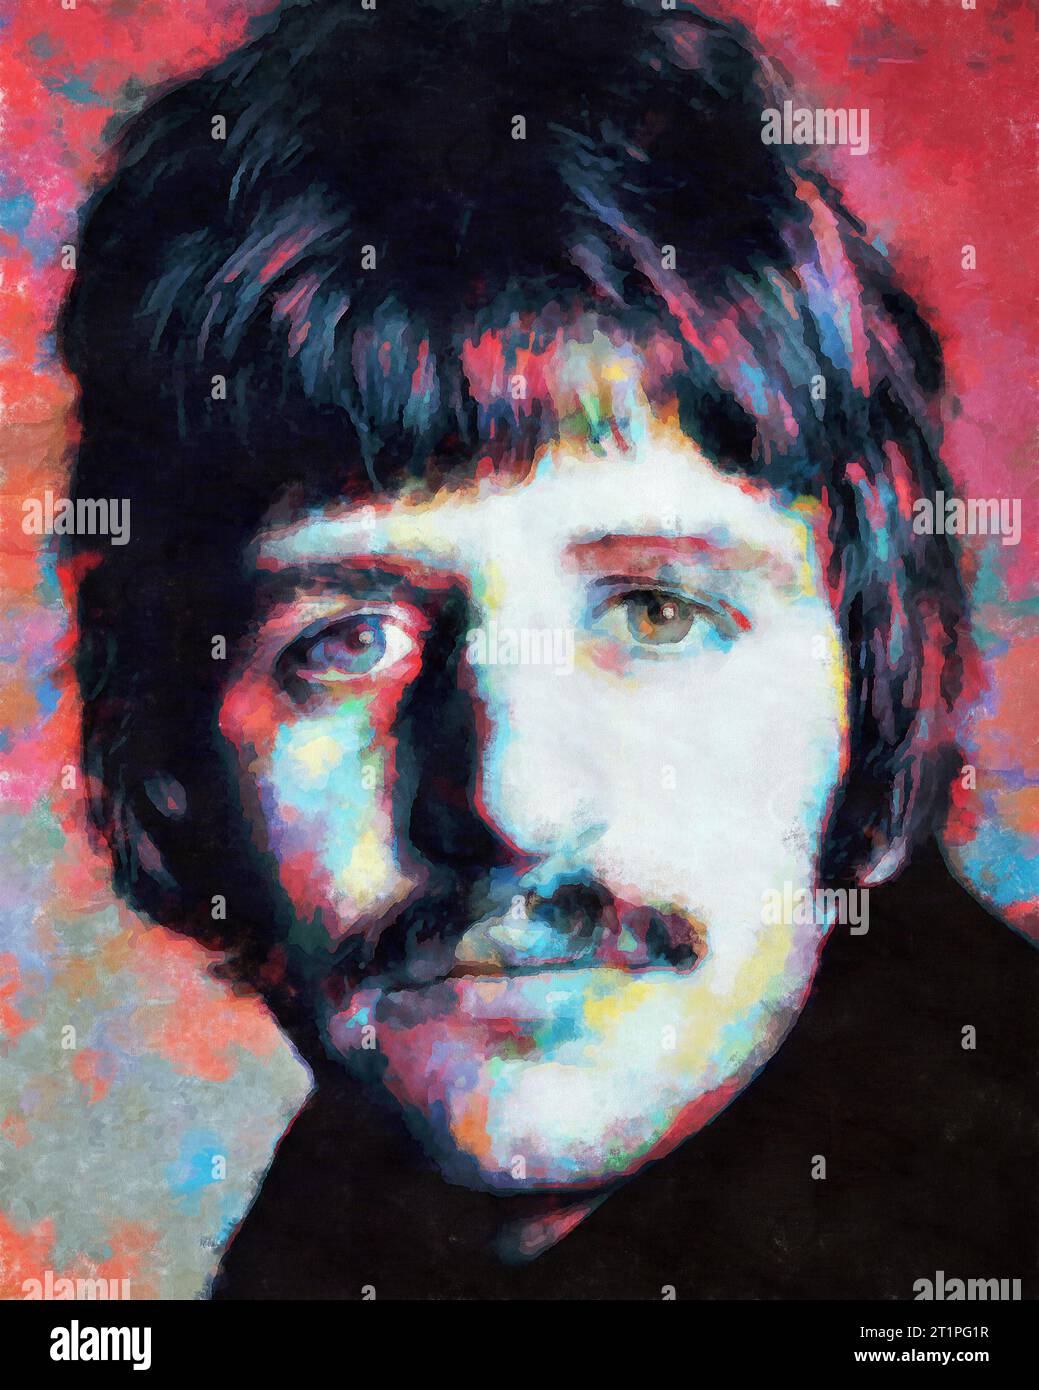 Illustrations Portrait Ringo Starr, British musician, songwriter, actor. Stock Photo